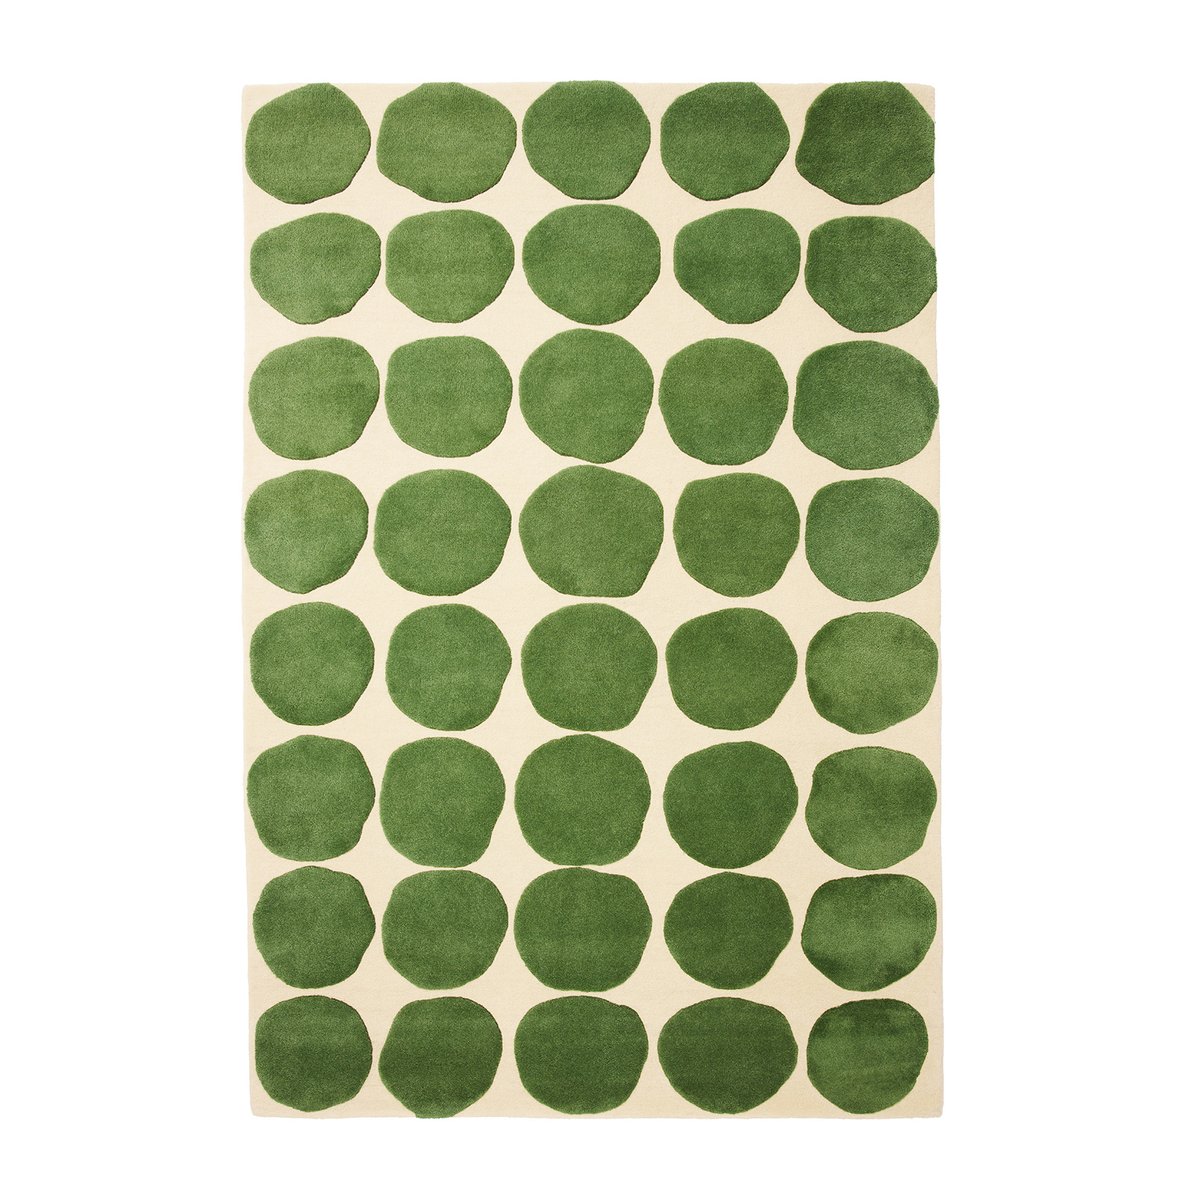 Chhatwal & Jonsson Dots vloerkleed Khaki-cactus green 180x270 cm